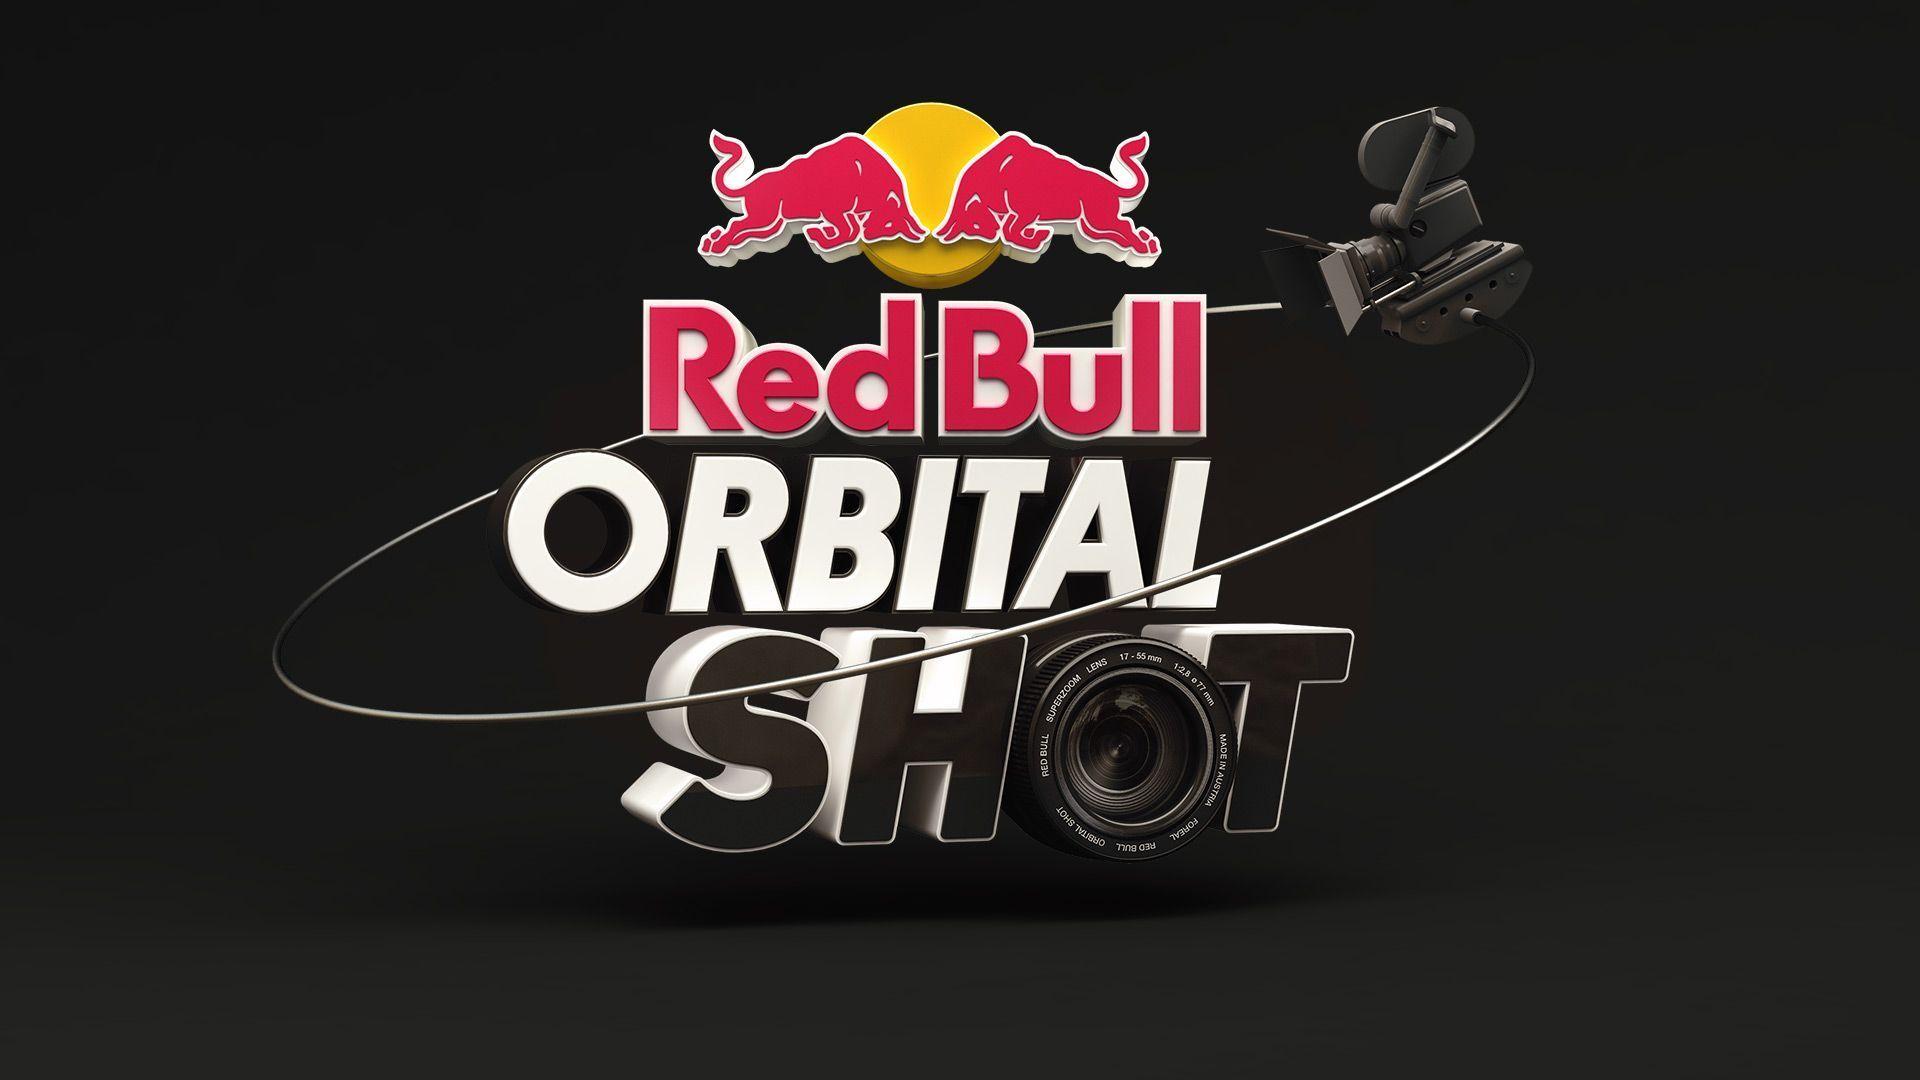 3D Logo for Red Bull s Orbital Wallpaper 1920x1080. Hot HD Wallpaper